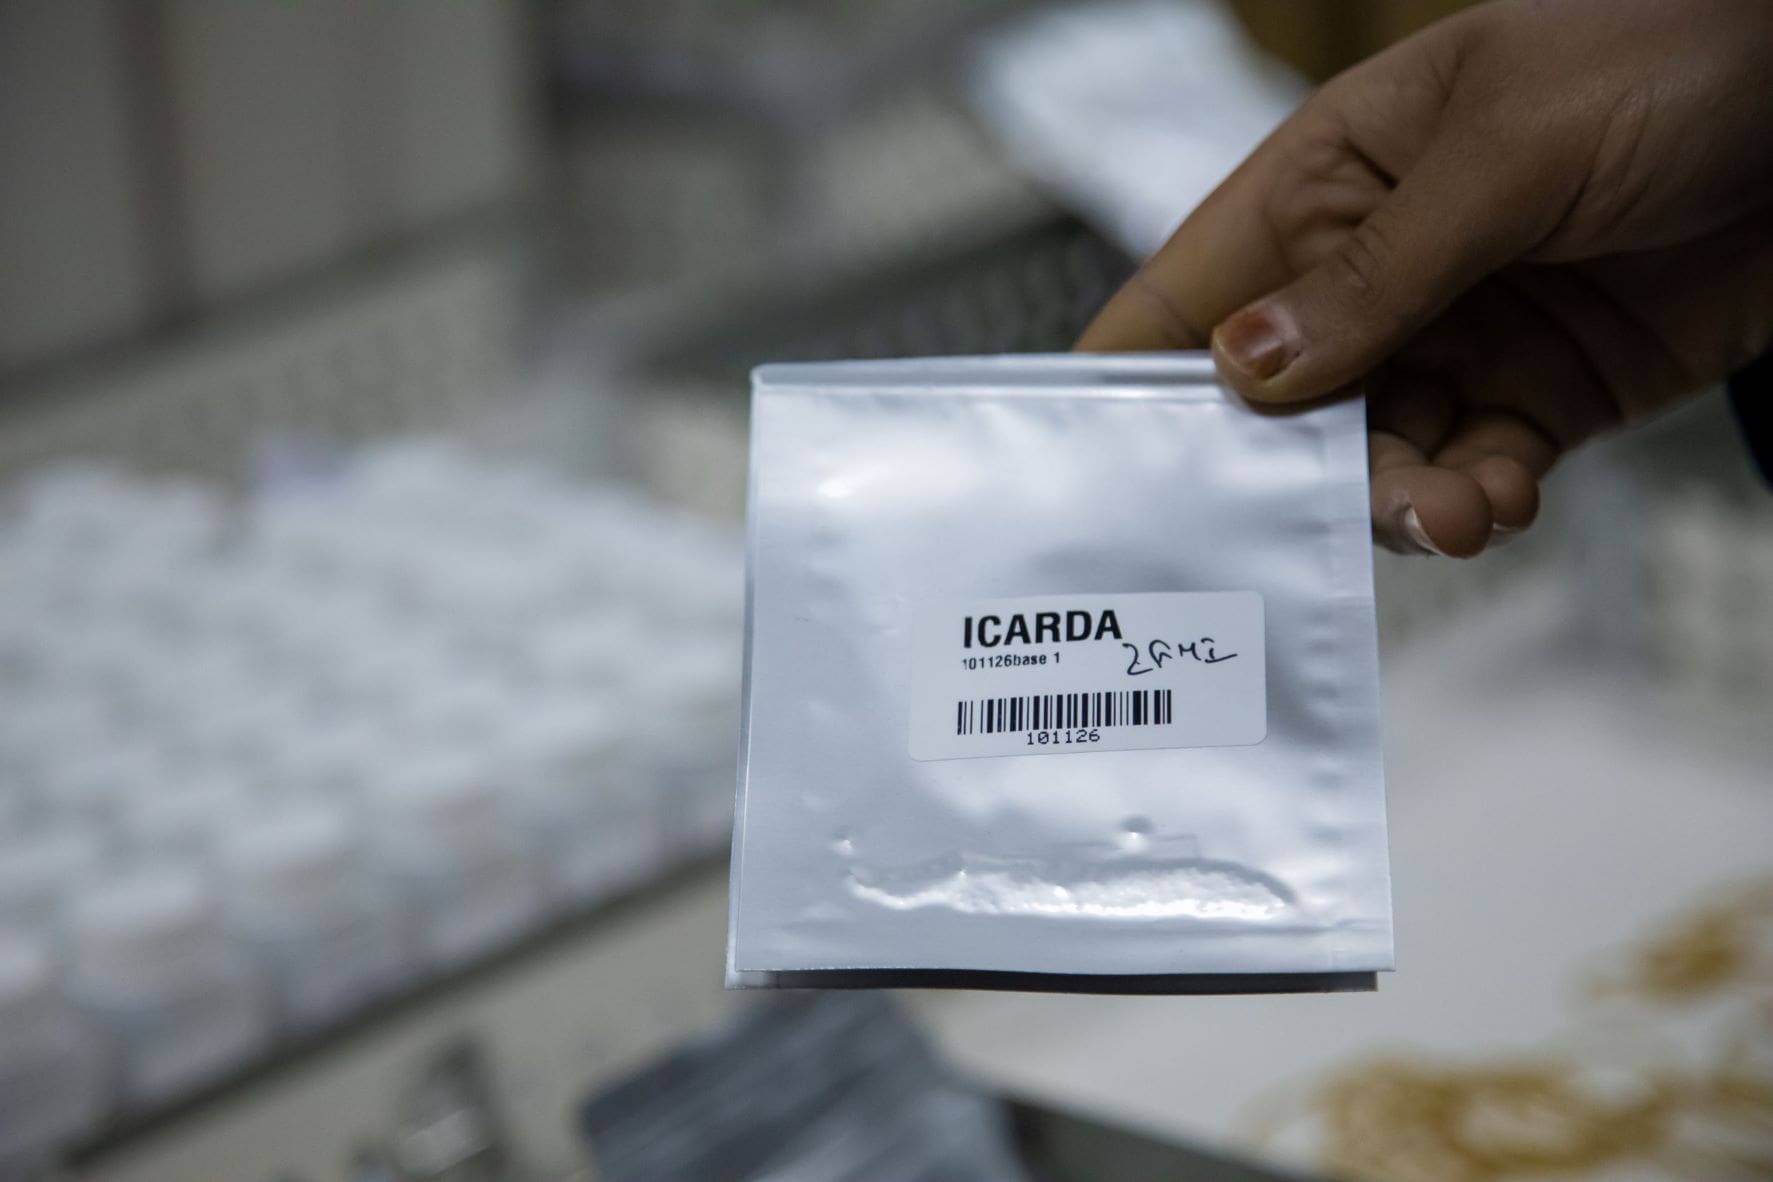 Pack of ICARDA seeds in Lebanon genebank